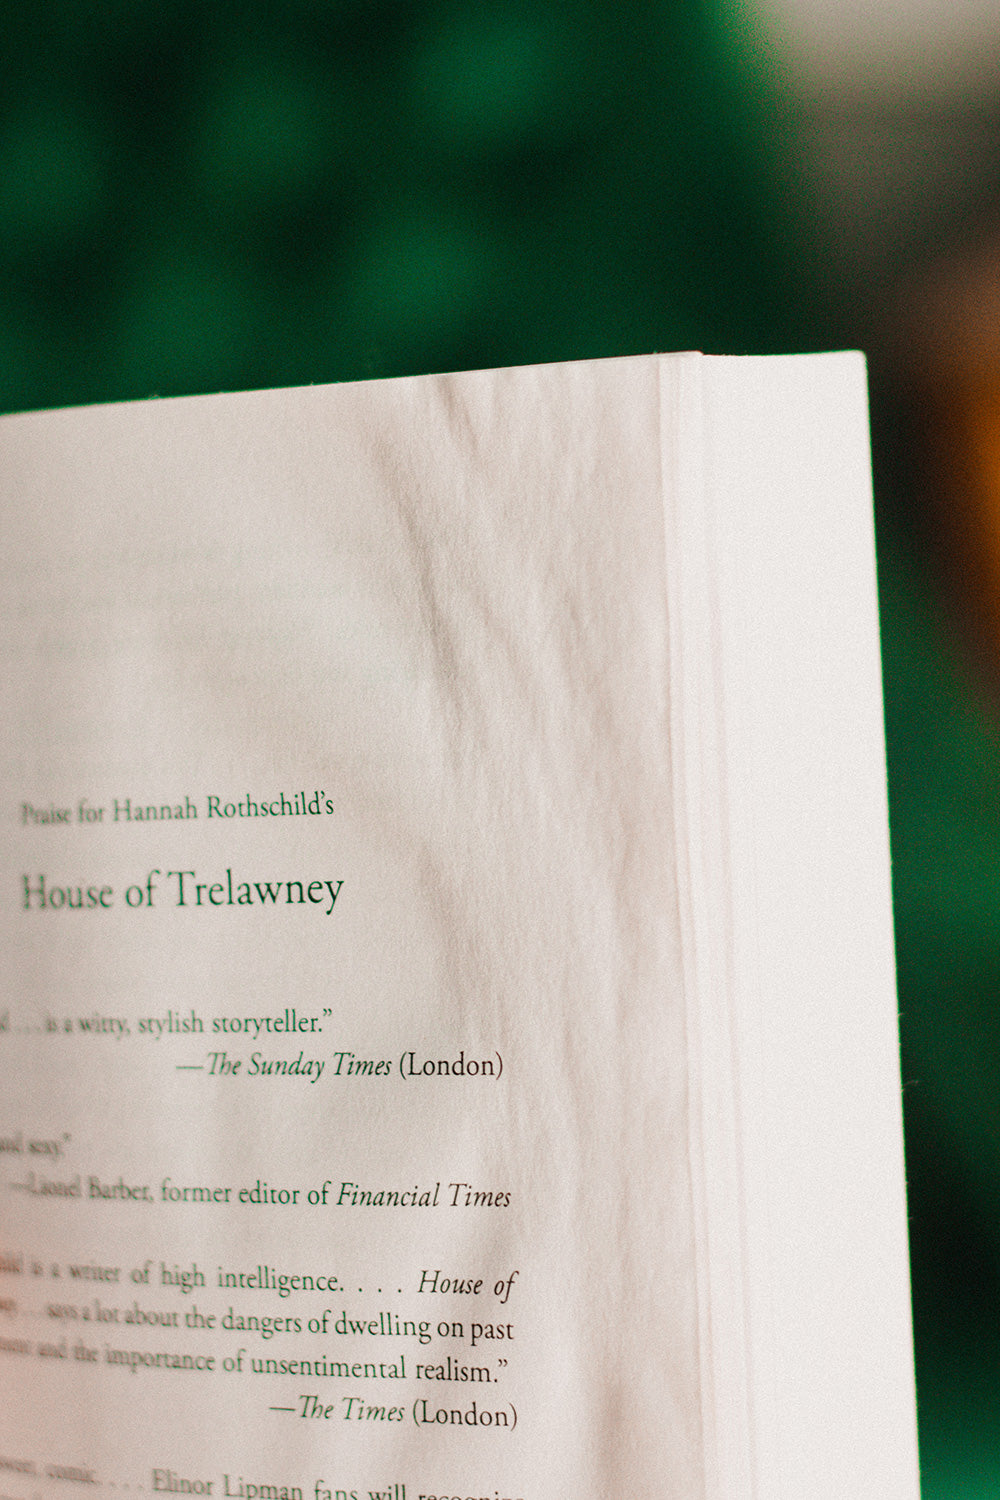 House of Trelawney by Hannah Rothschild